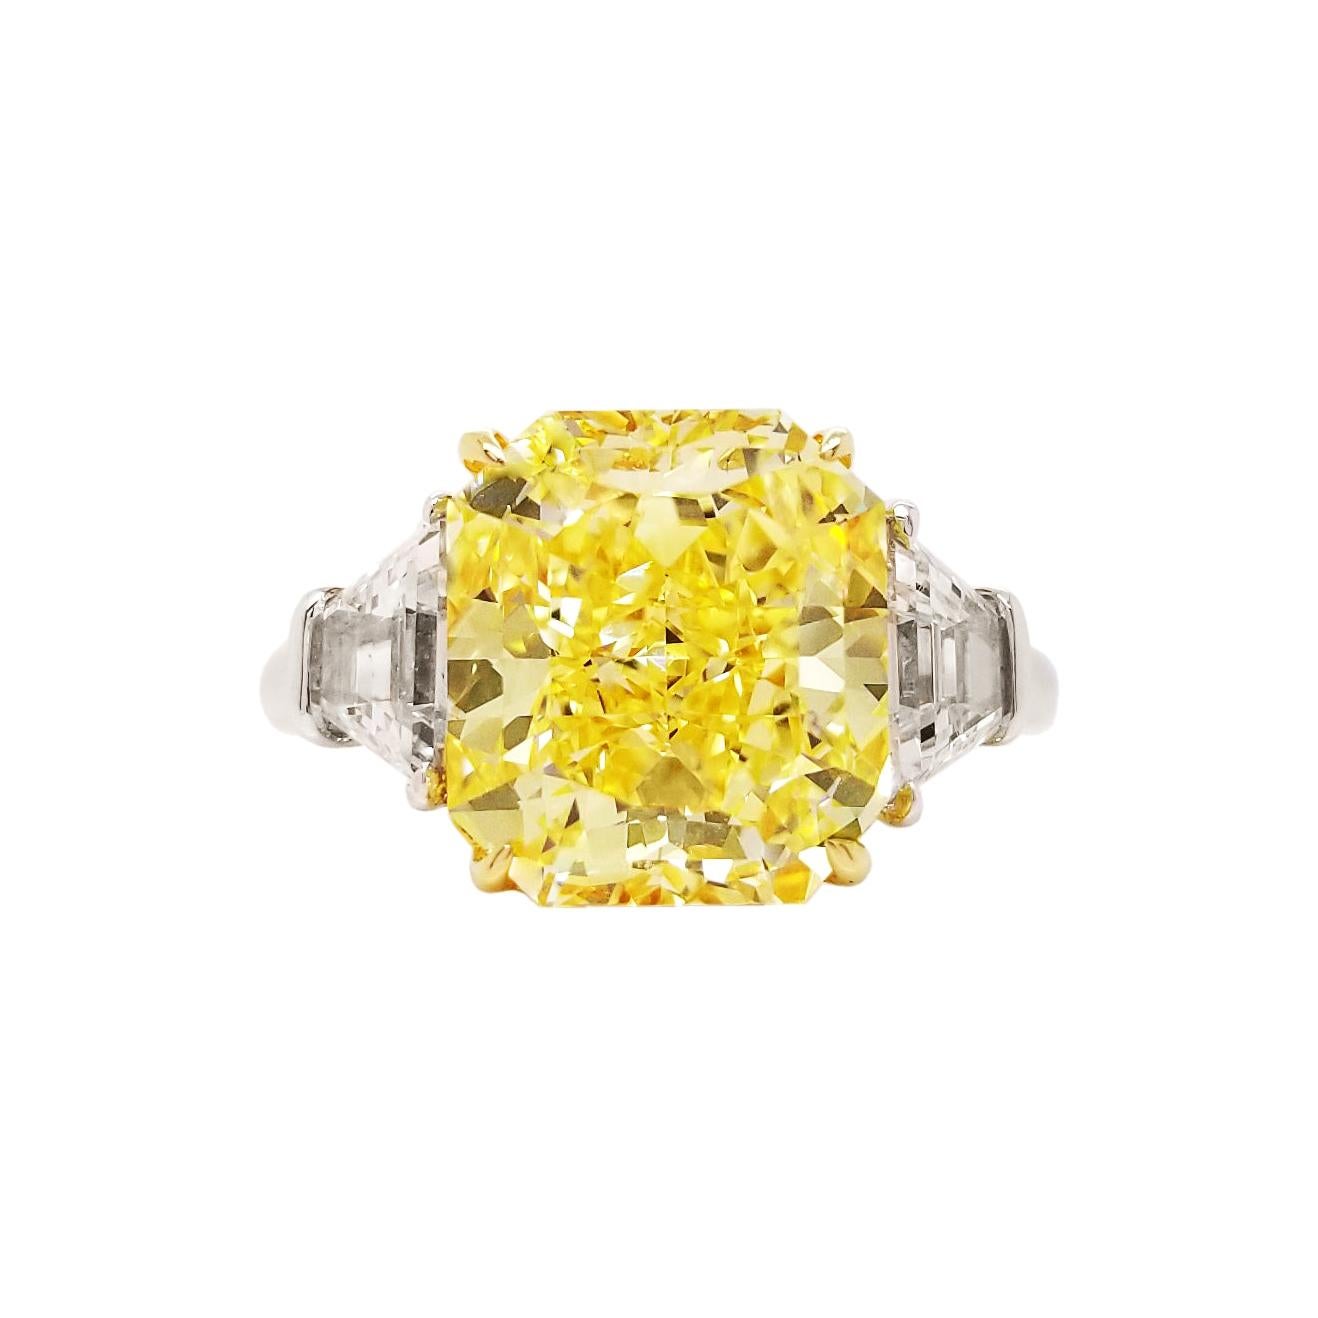 Scarselli 5 Carat Fancy Intense Yellow Diamond Ring in Platinum